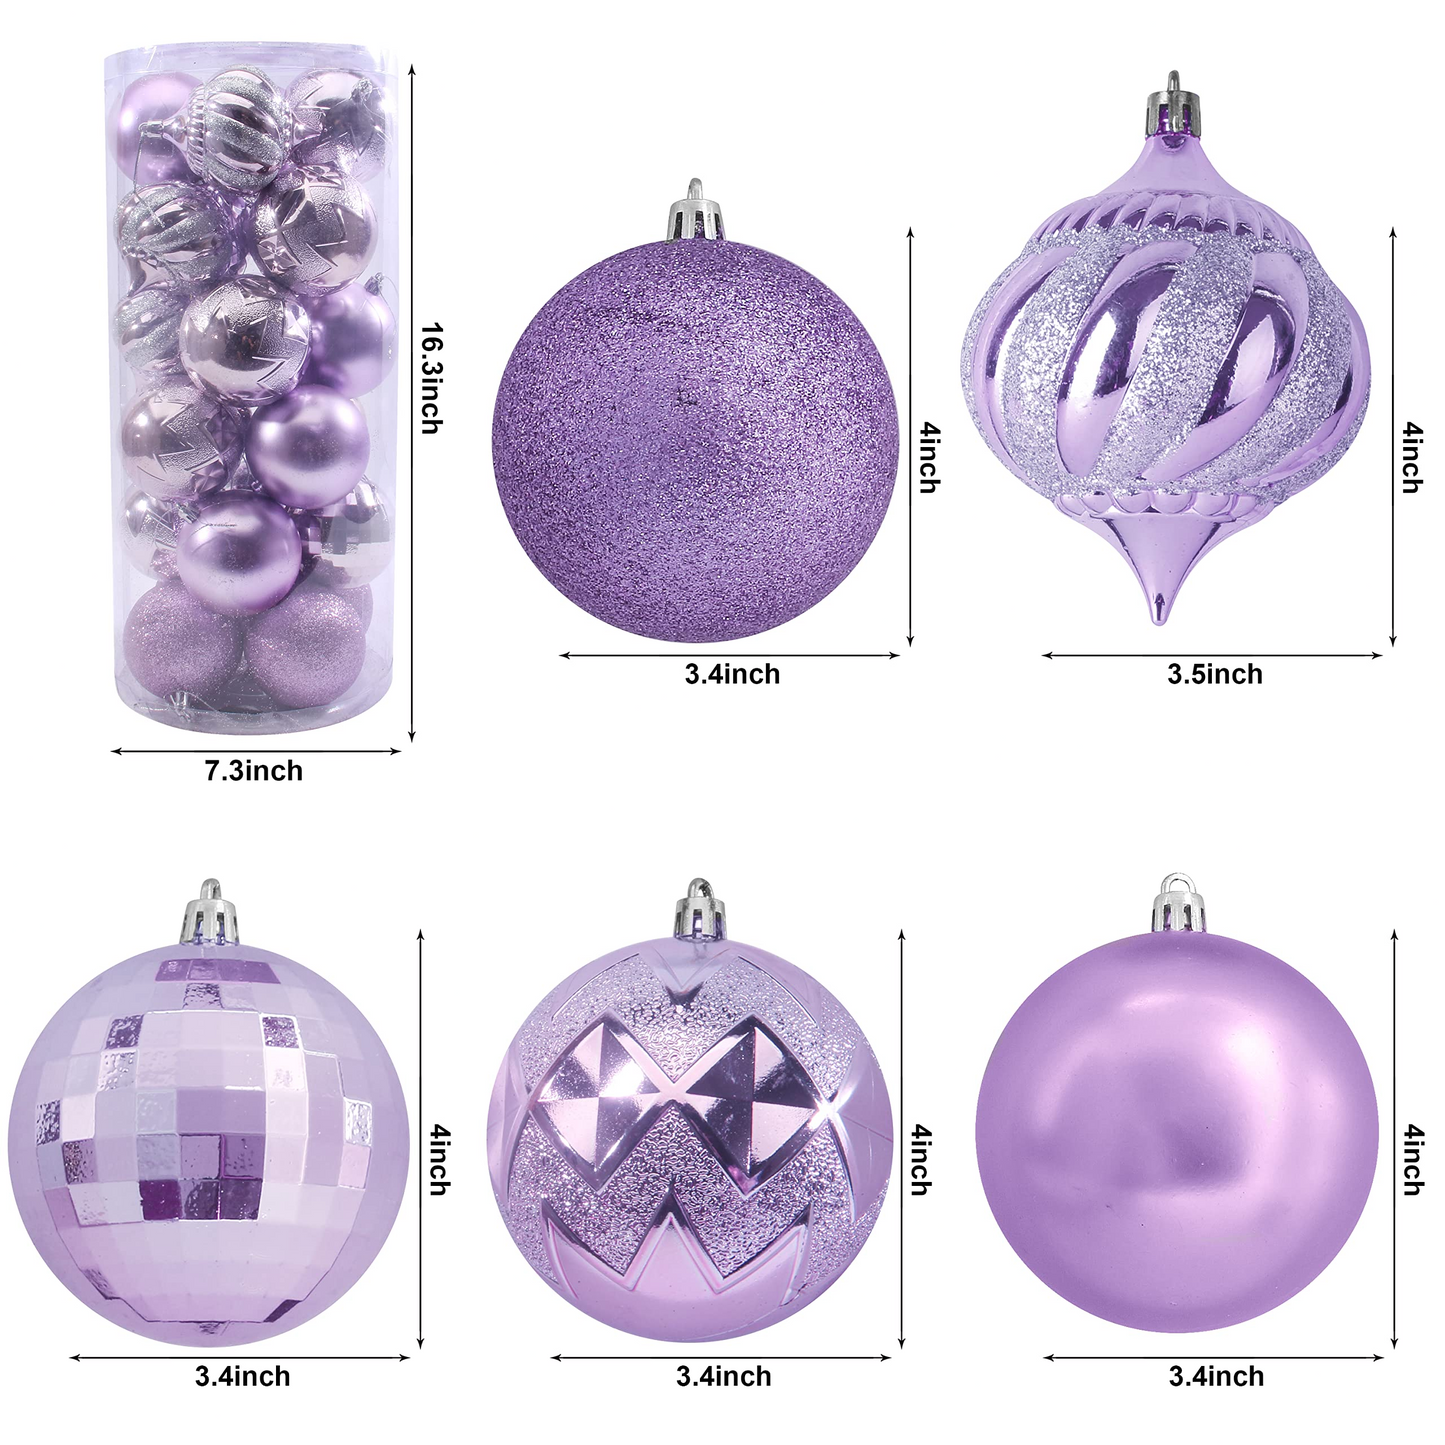 80mm 24ct Basic Christmas Ball Ornaments - Lavender